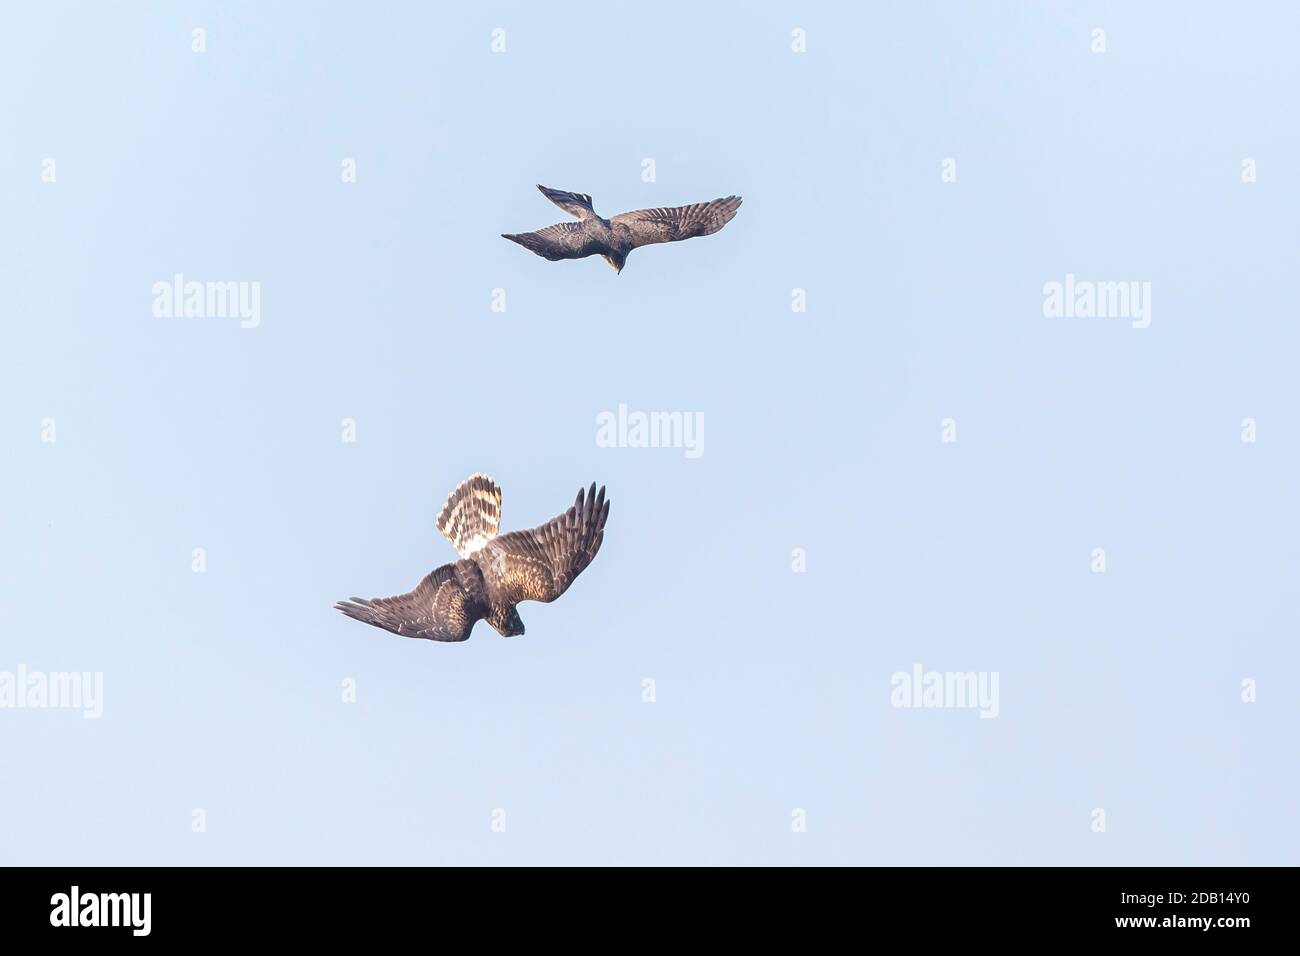 Femmina Hen harrier, Circus cyaneus, o arrier settentrionale combattendo con uno Sparrowhawk, Accipiter nisus Foto Stock